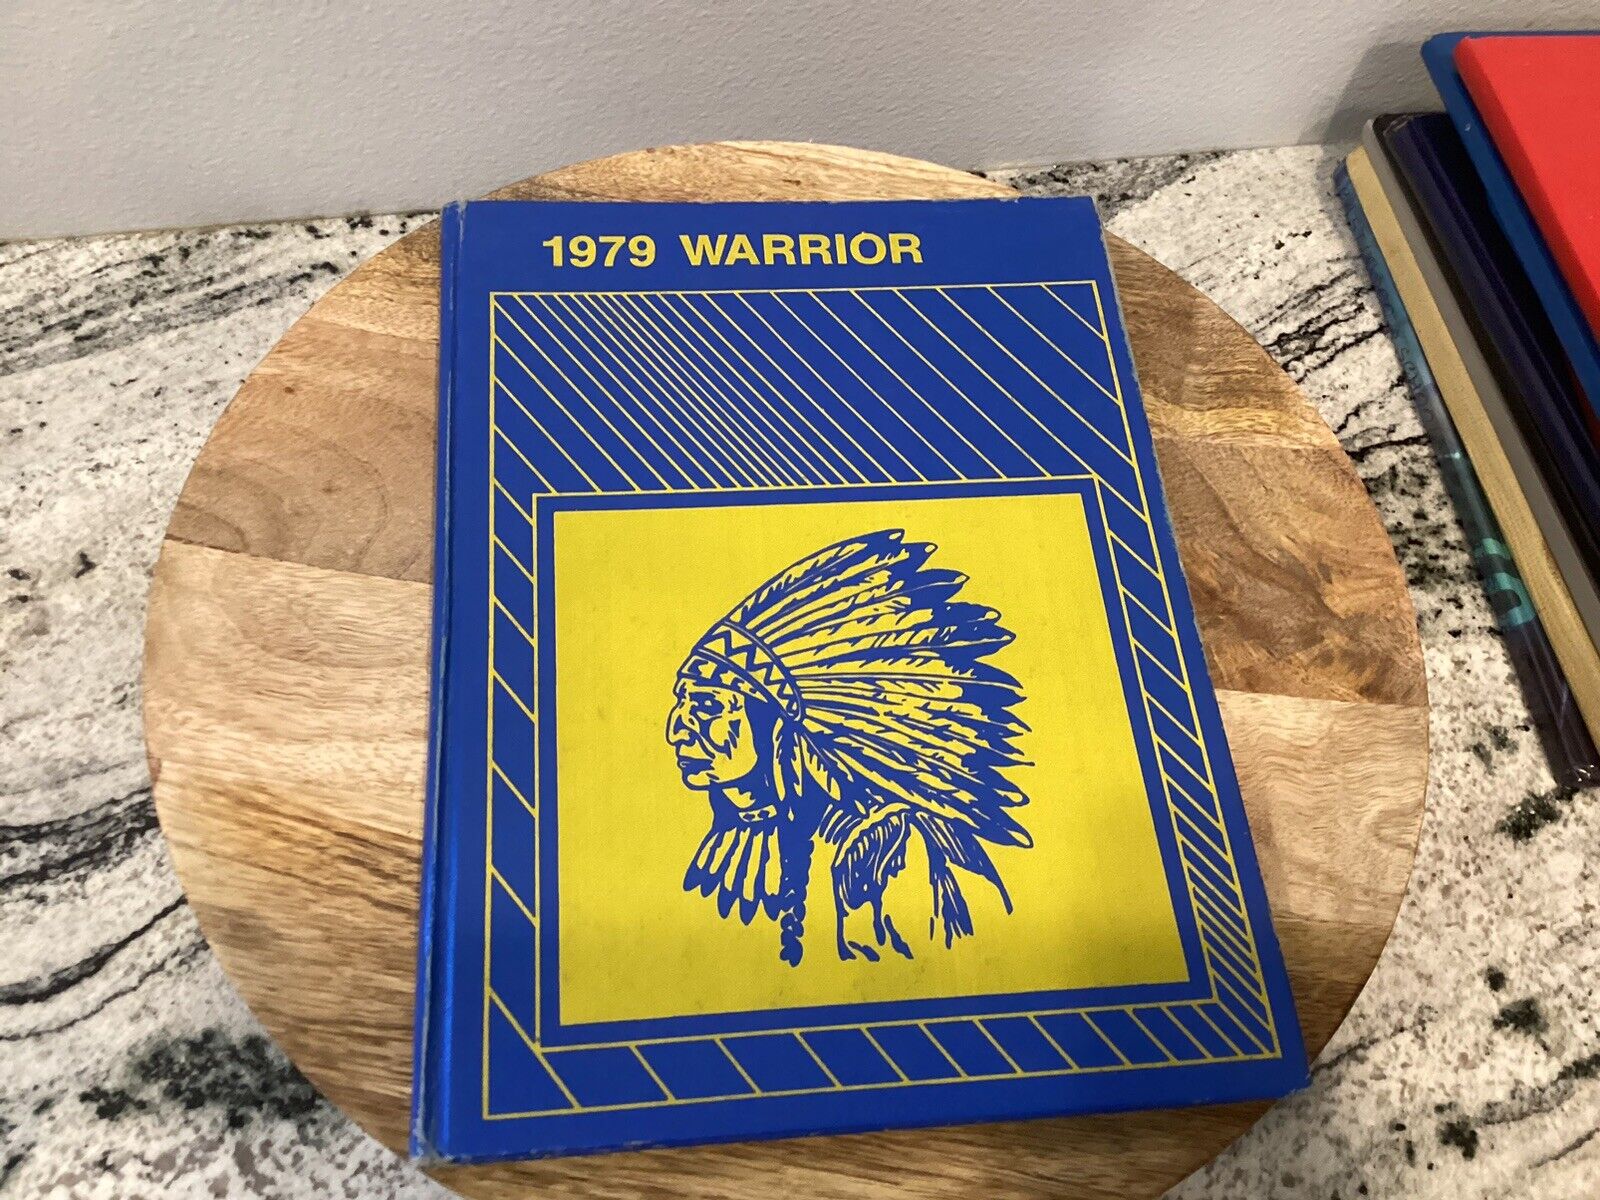 Castlewood  SD Castlewood High School Warriors yearbook 1979 South Dakota